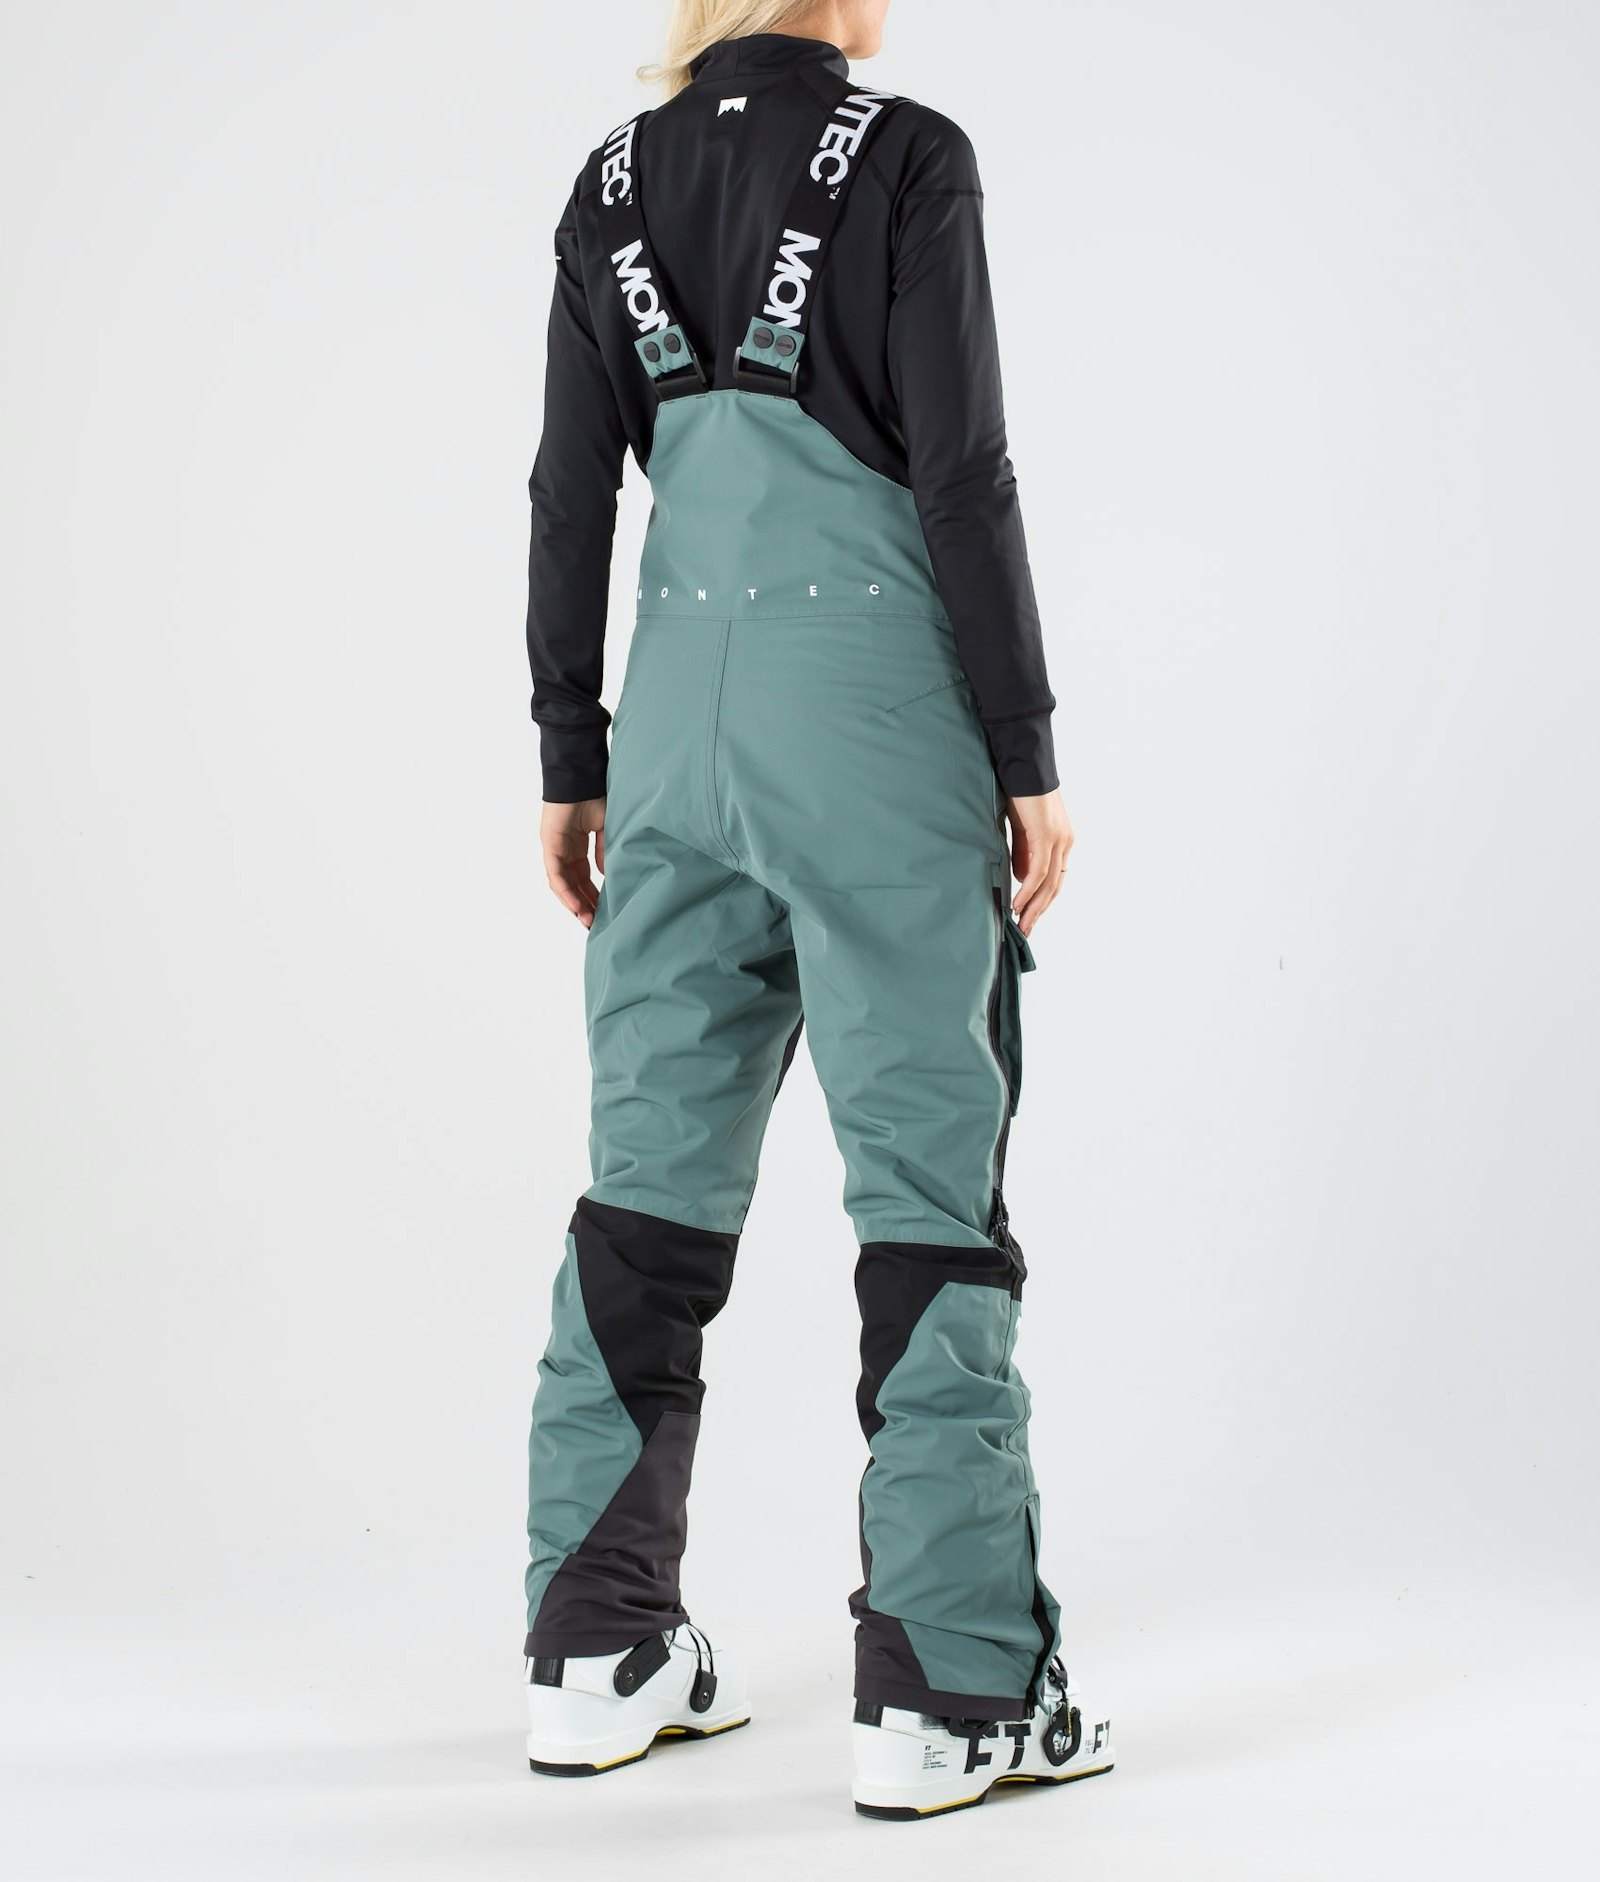 Fawk W 2019 Pantalones Esquí Mujer Atlantic/Black